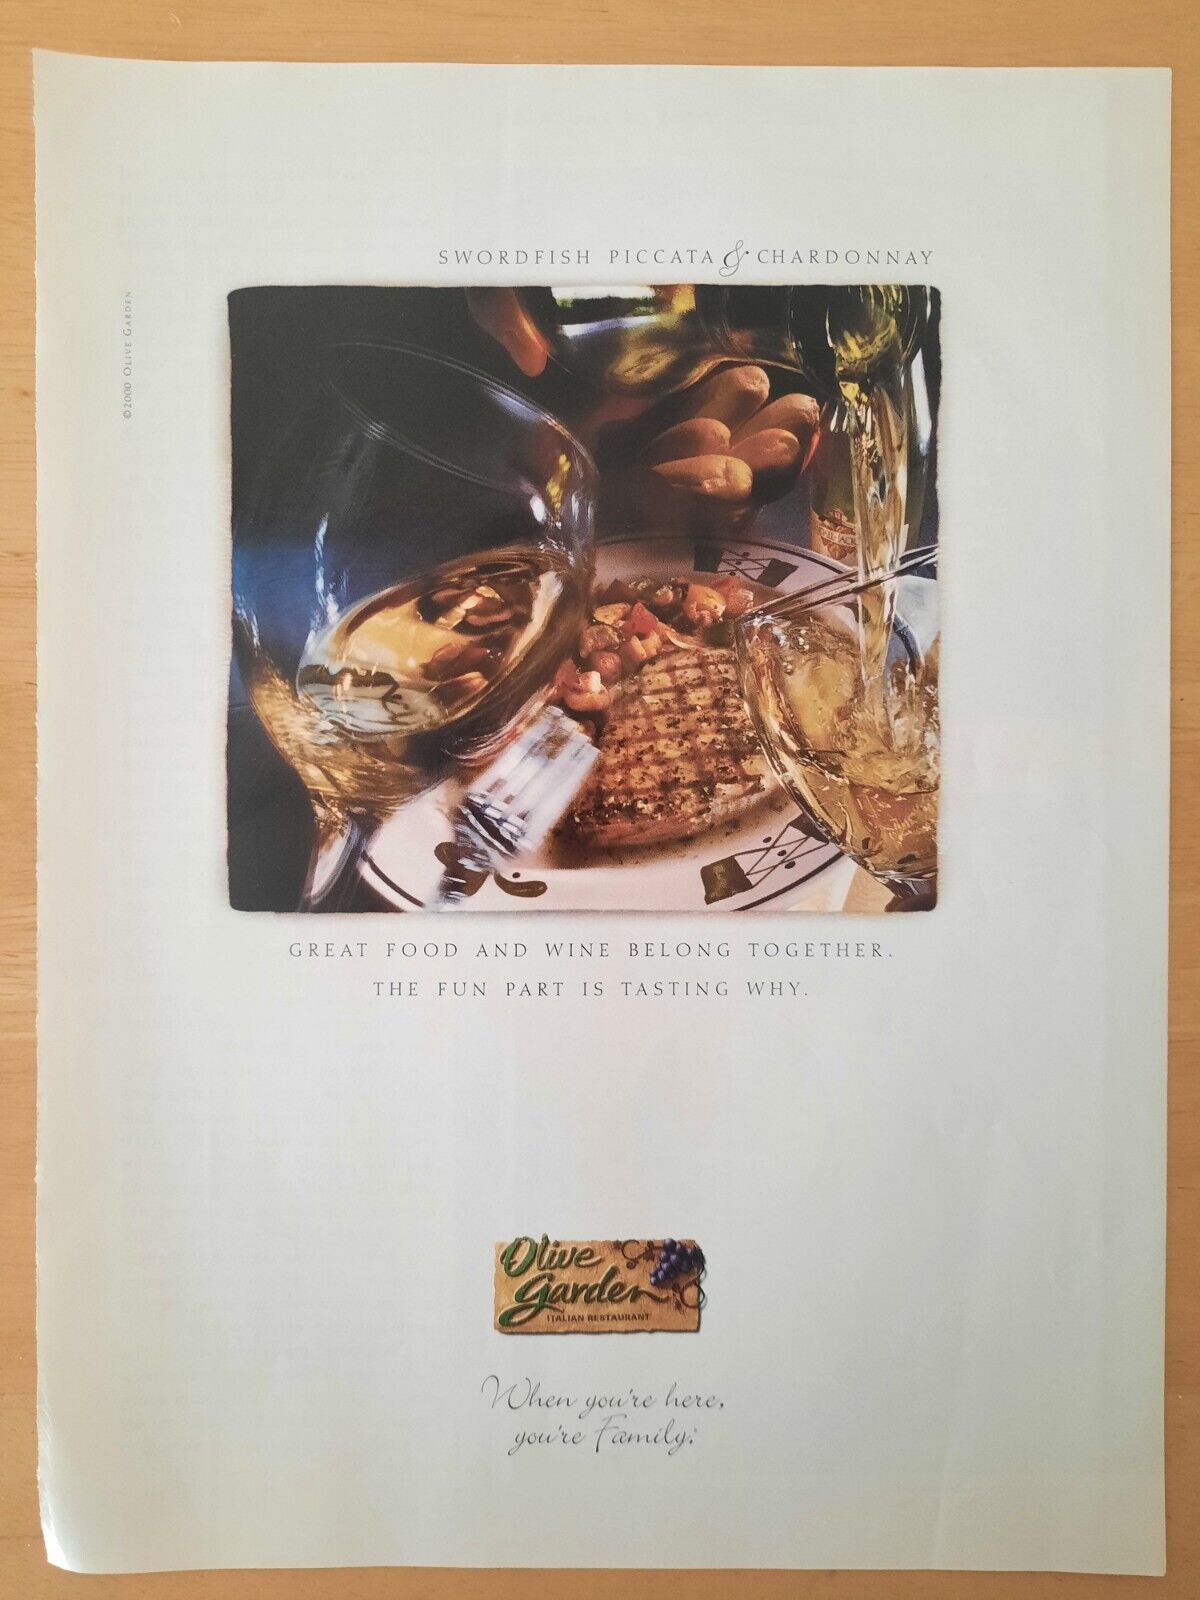 2000 Vintage Original Print Ad Olive Garden Swordfish Piccata & Chardonnay 